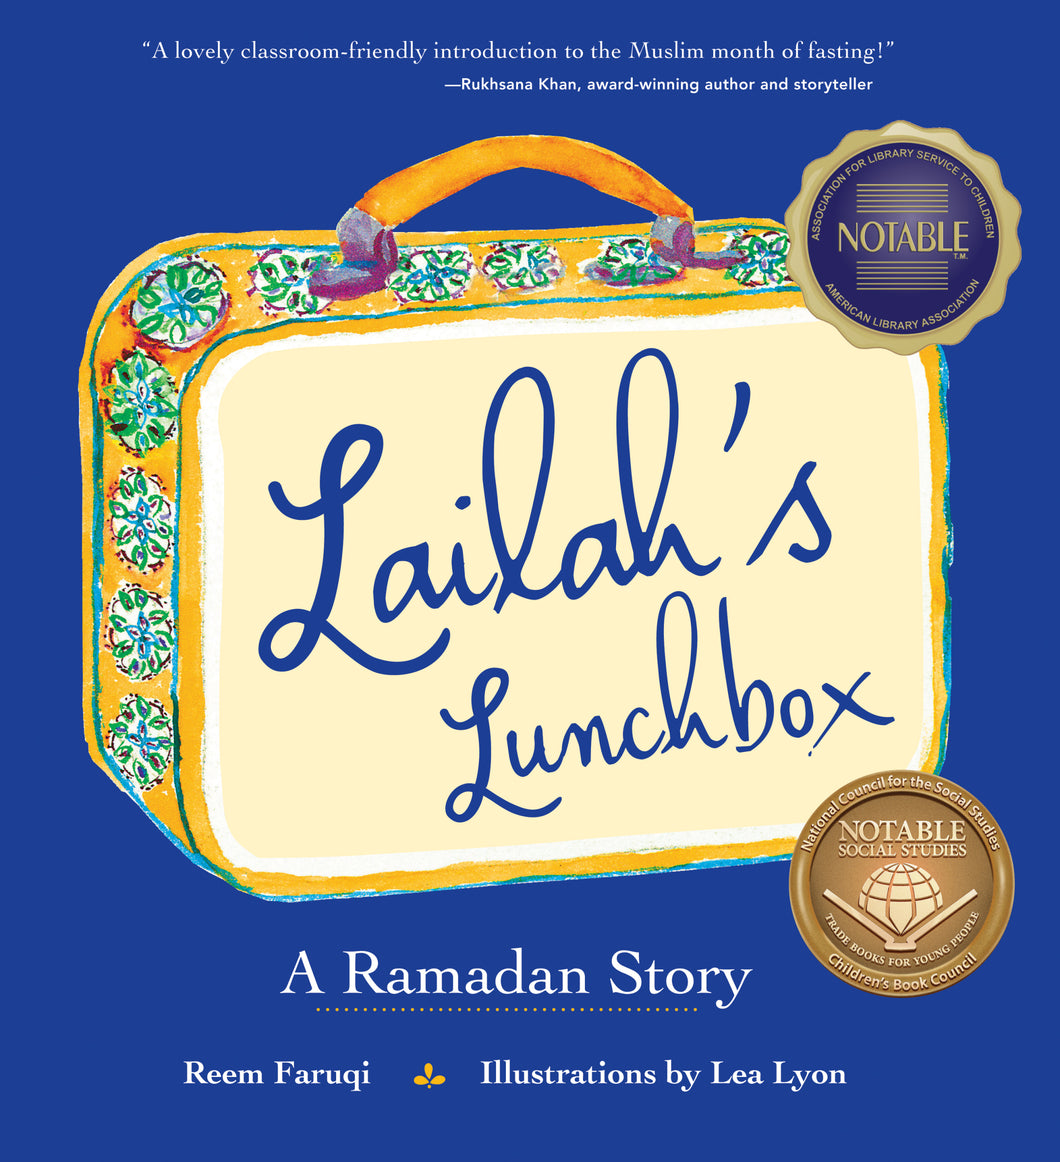 Lailah's Lunchbox - A Ramadan Story